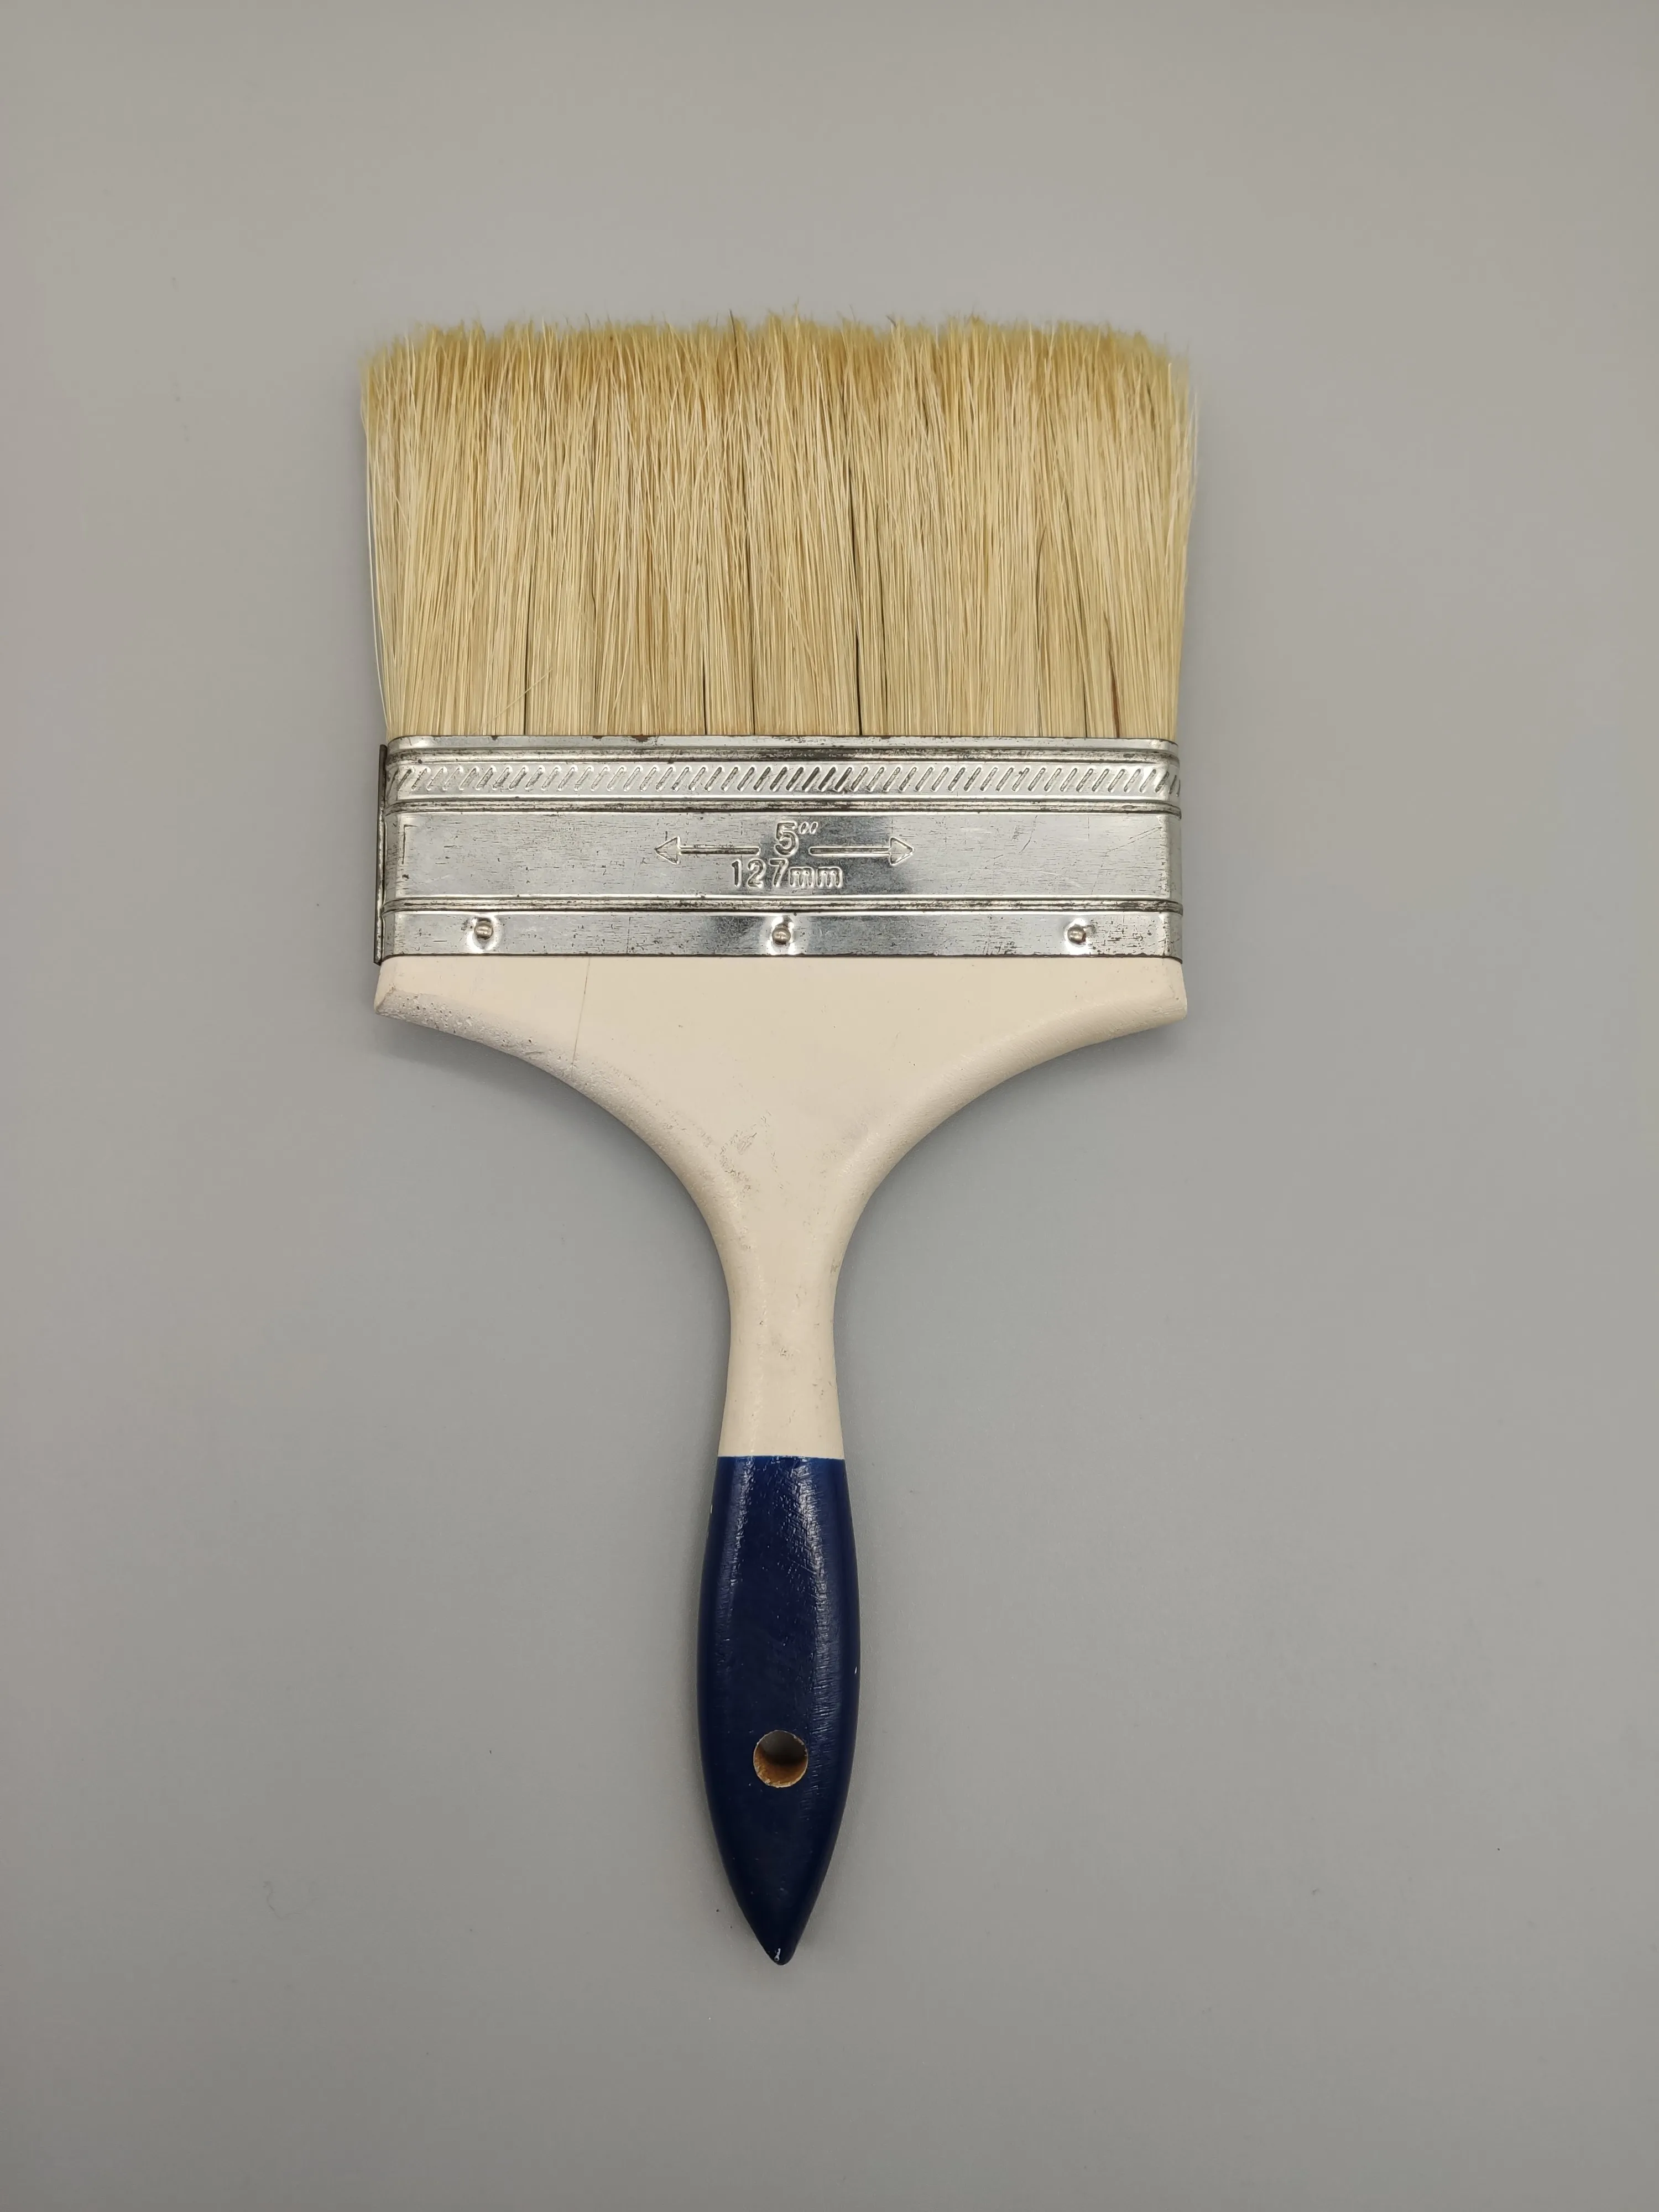 China quaility wooden handle paint brush  clean brush